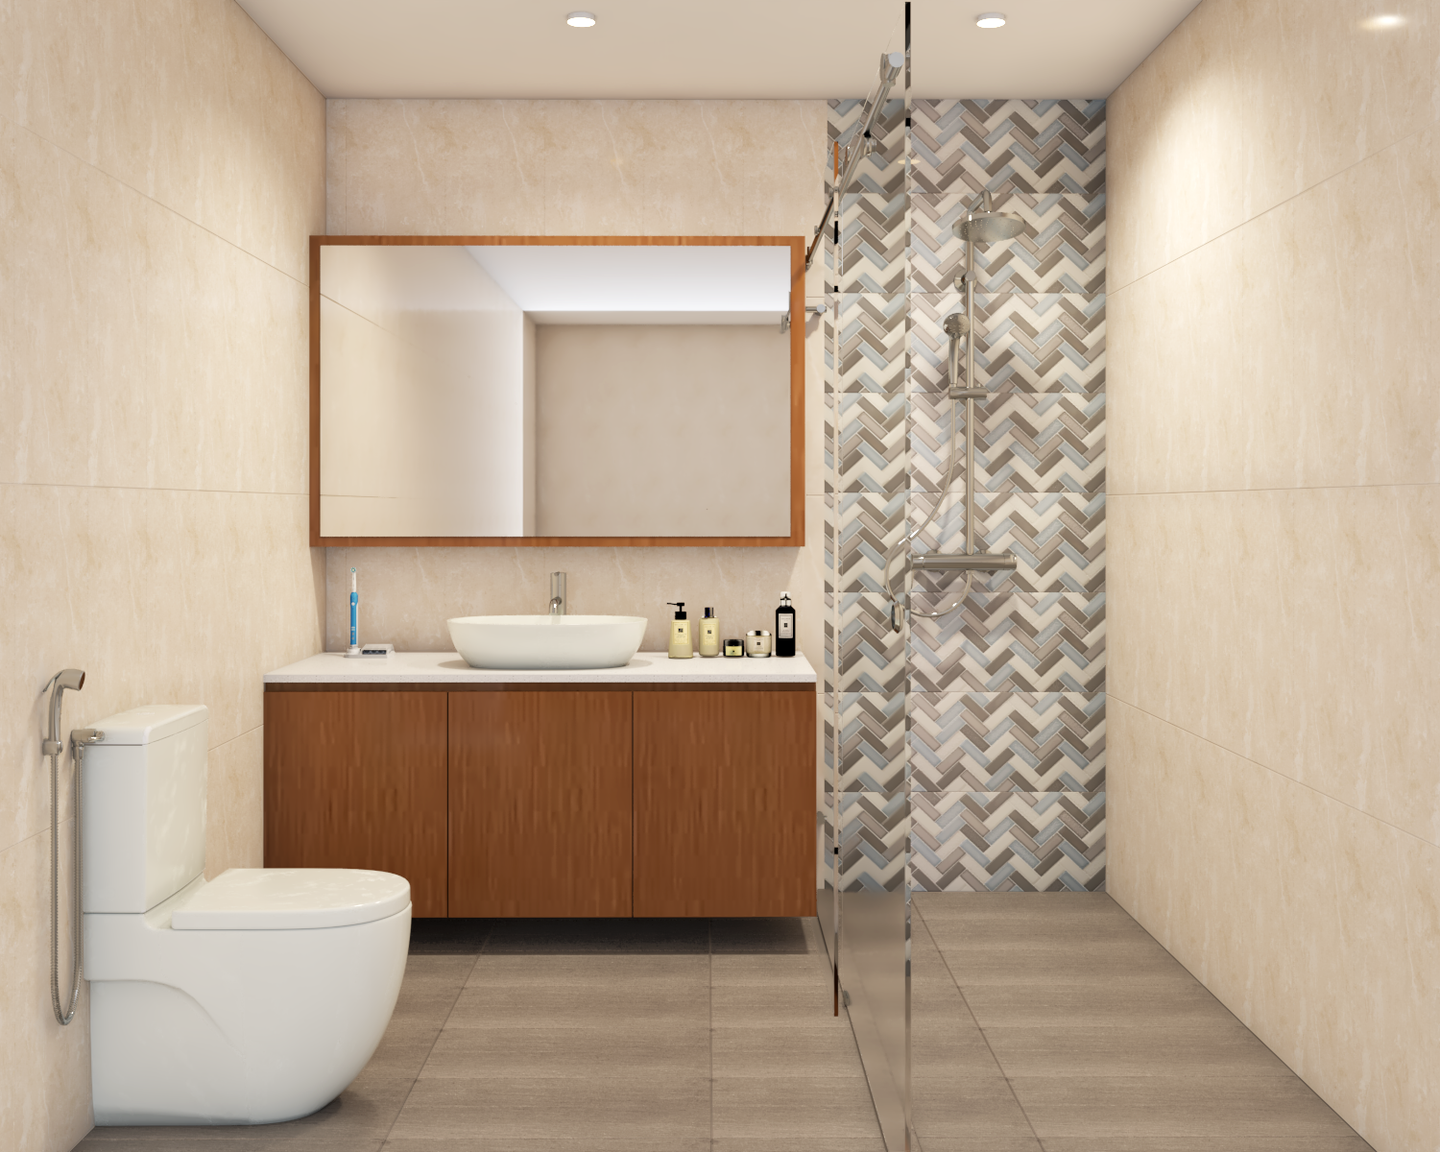 Contemporary Bathroom Design With Wooden Vanity - Livspace